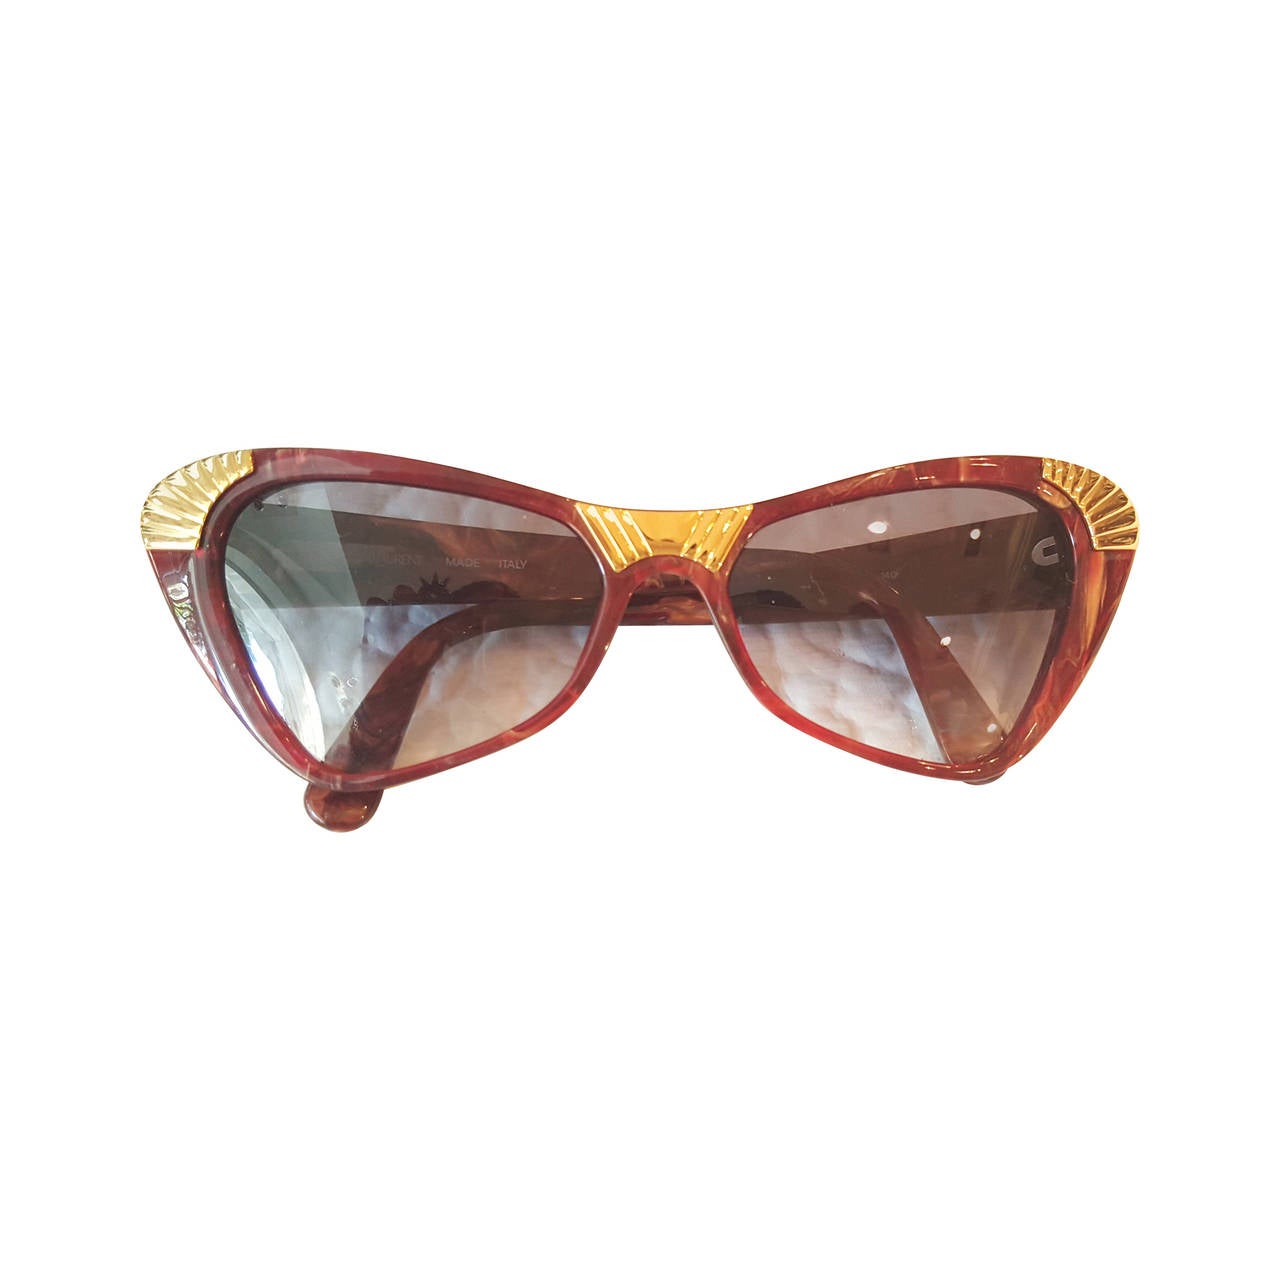 1980s Yves Saint Laurent sunglasses